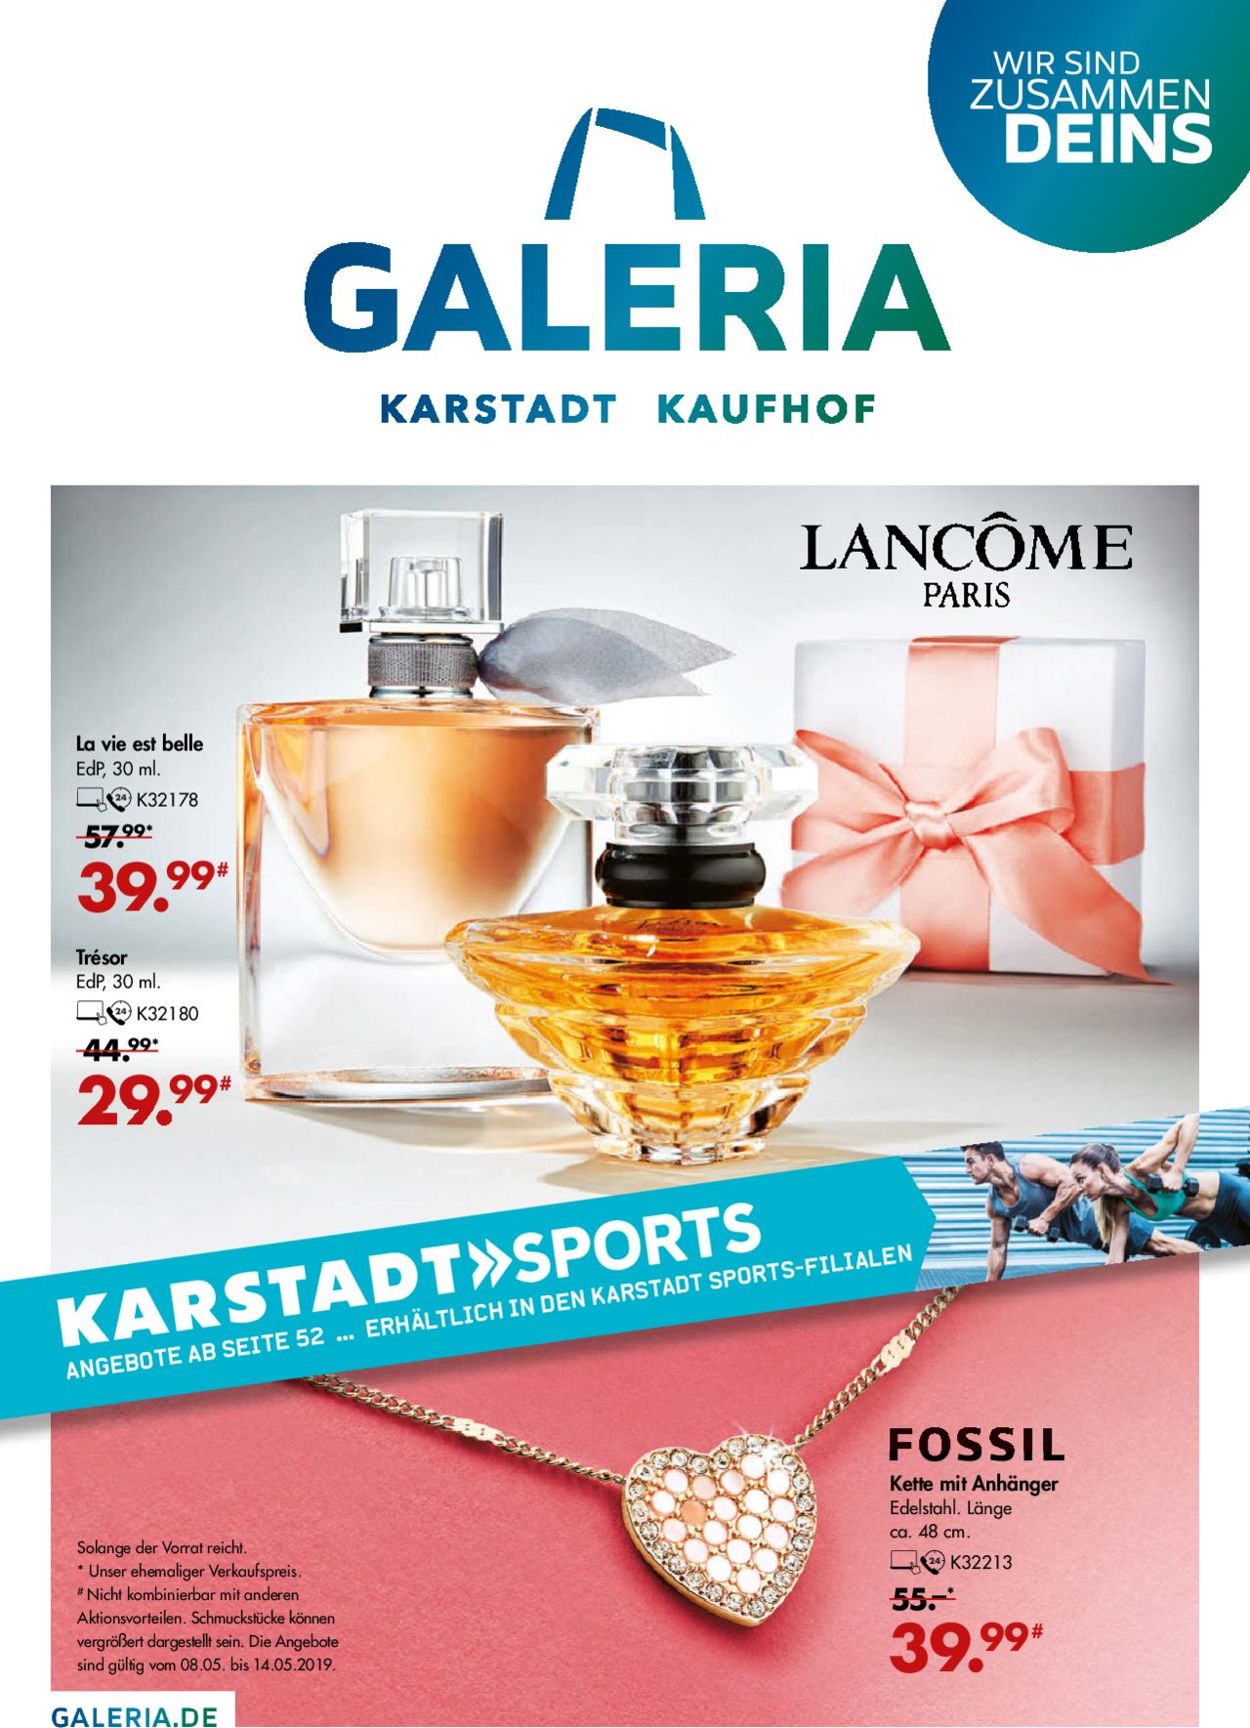 GALERIA Kaufhof Prospekt - Aktuell vom 08.05-14.05.2019